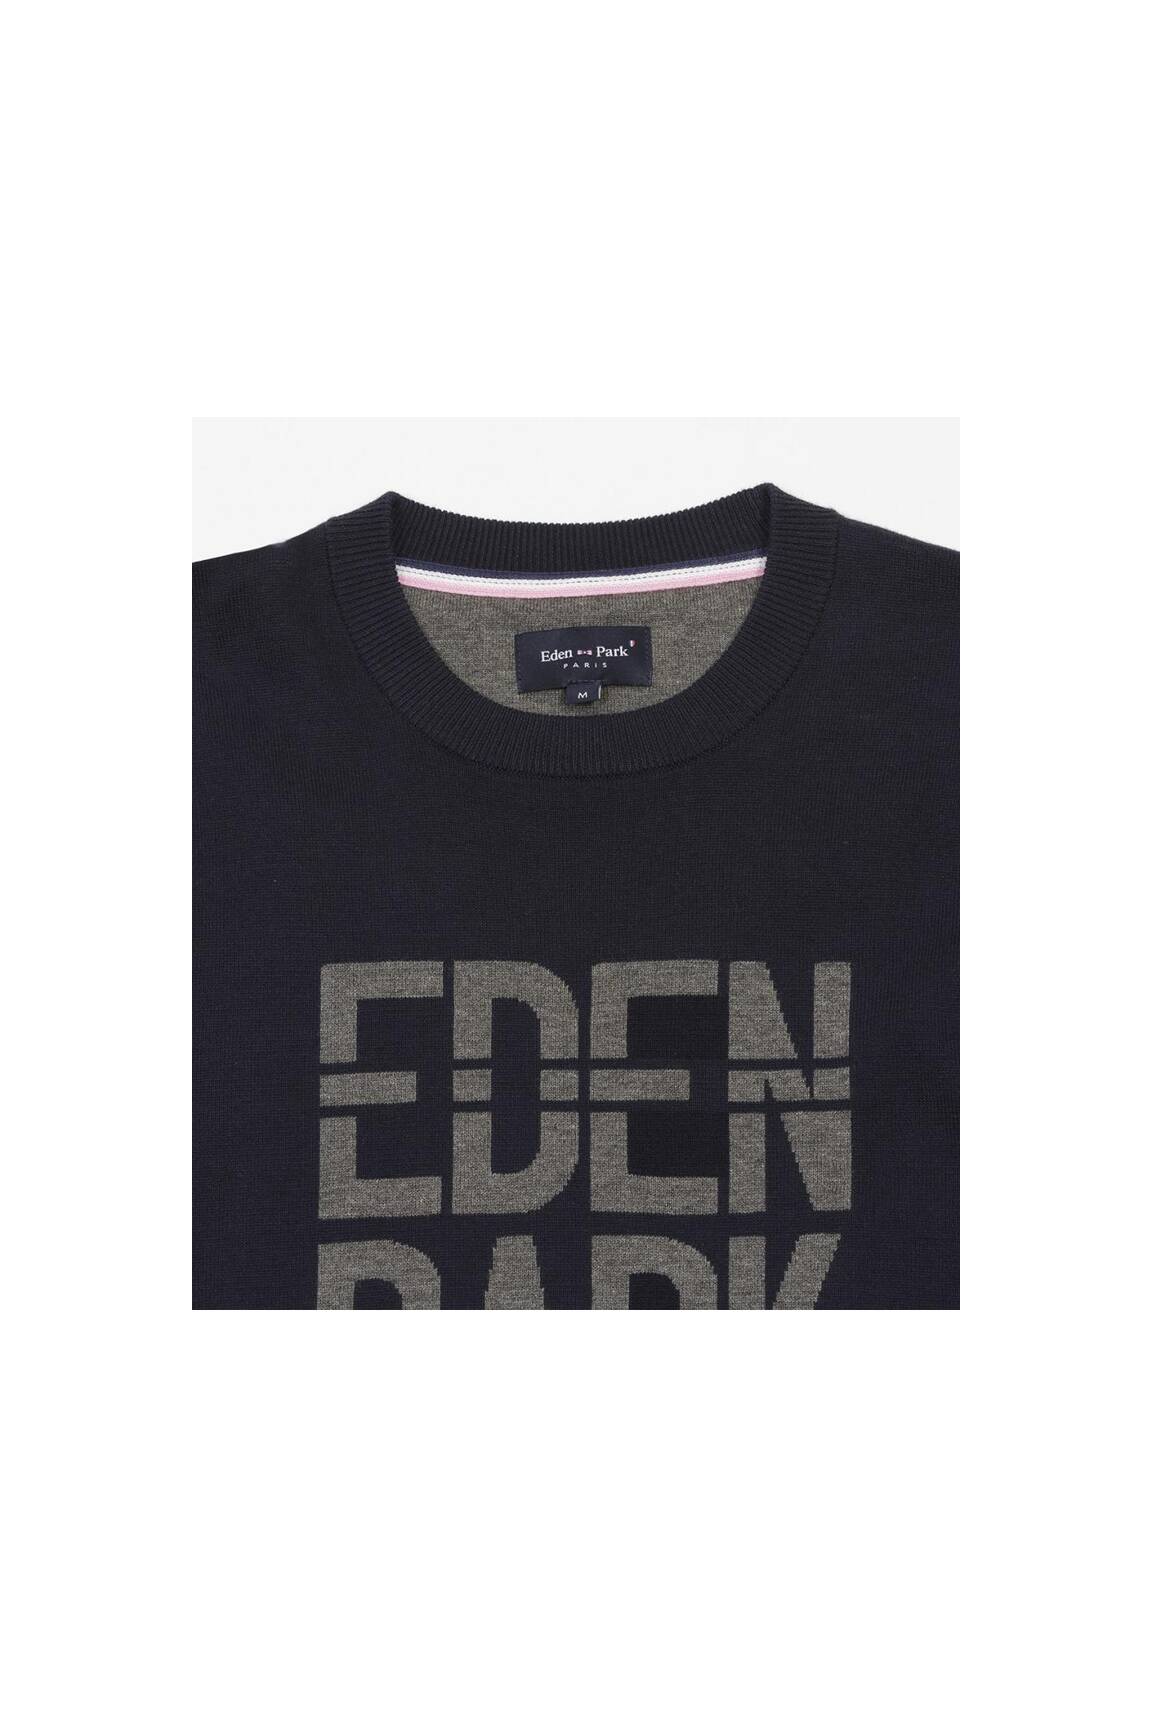 Eden Park Pulls Homme De Couleur Bleu 2099347-bleu00 - Modz